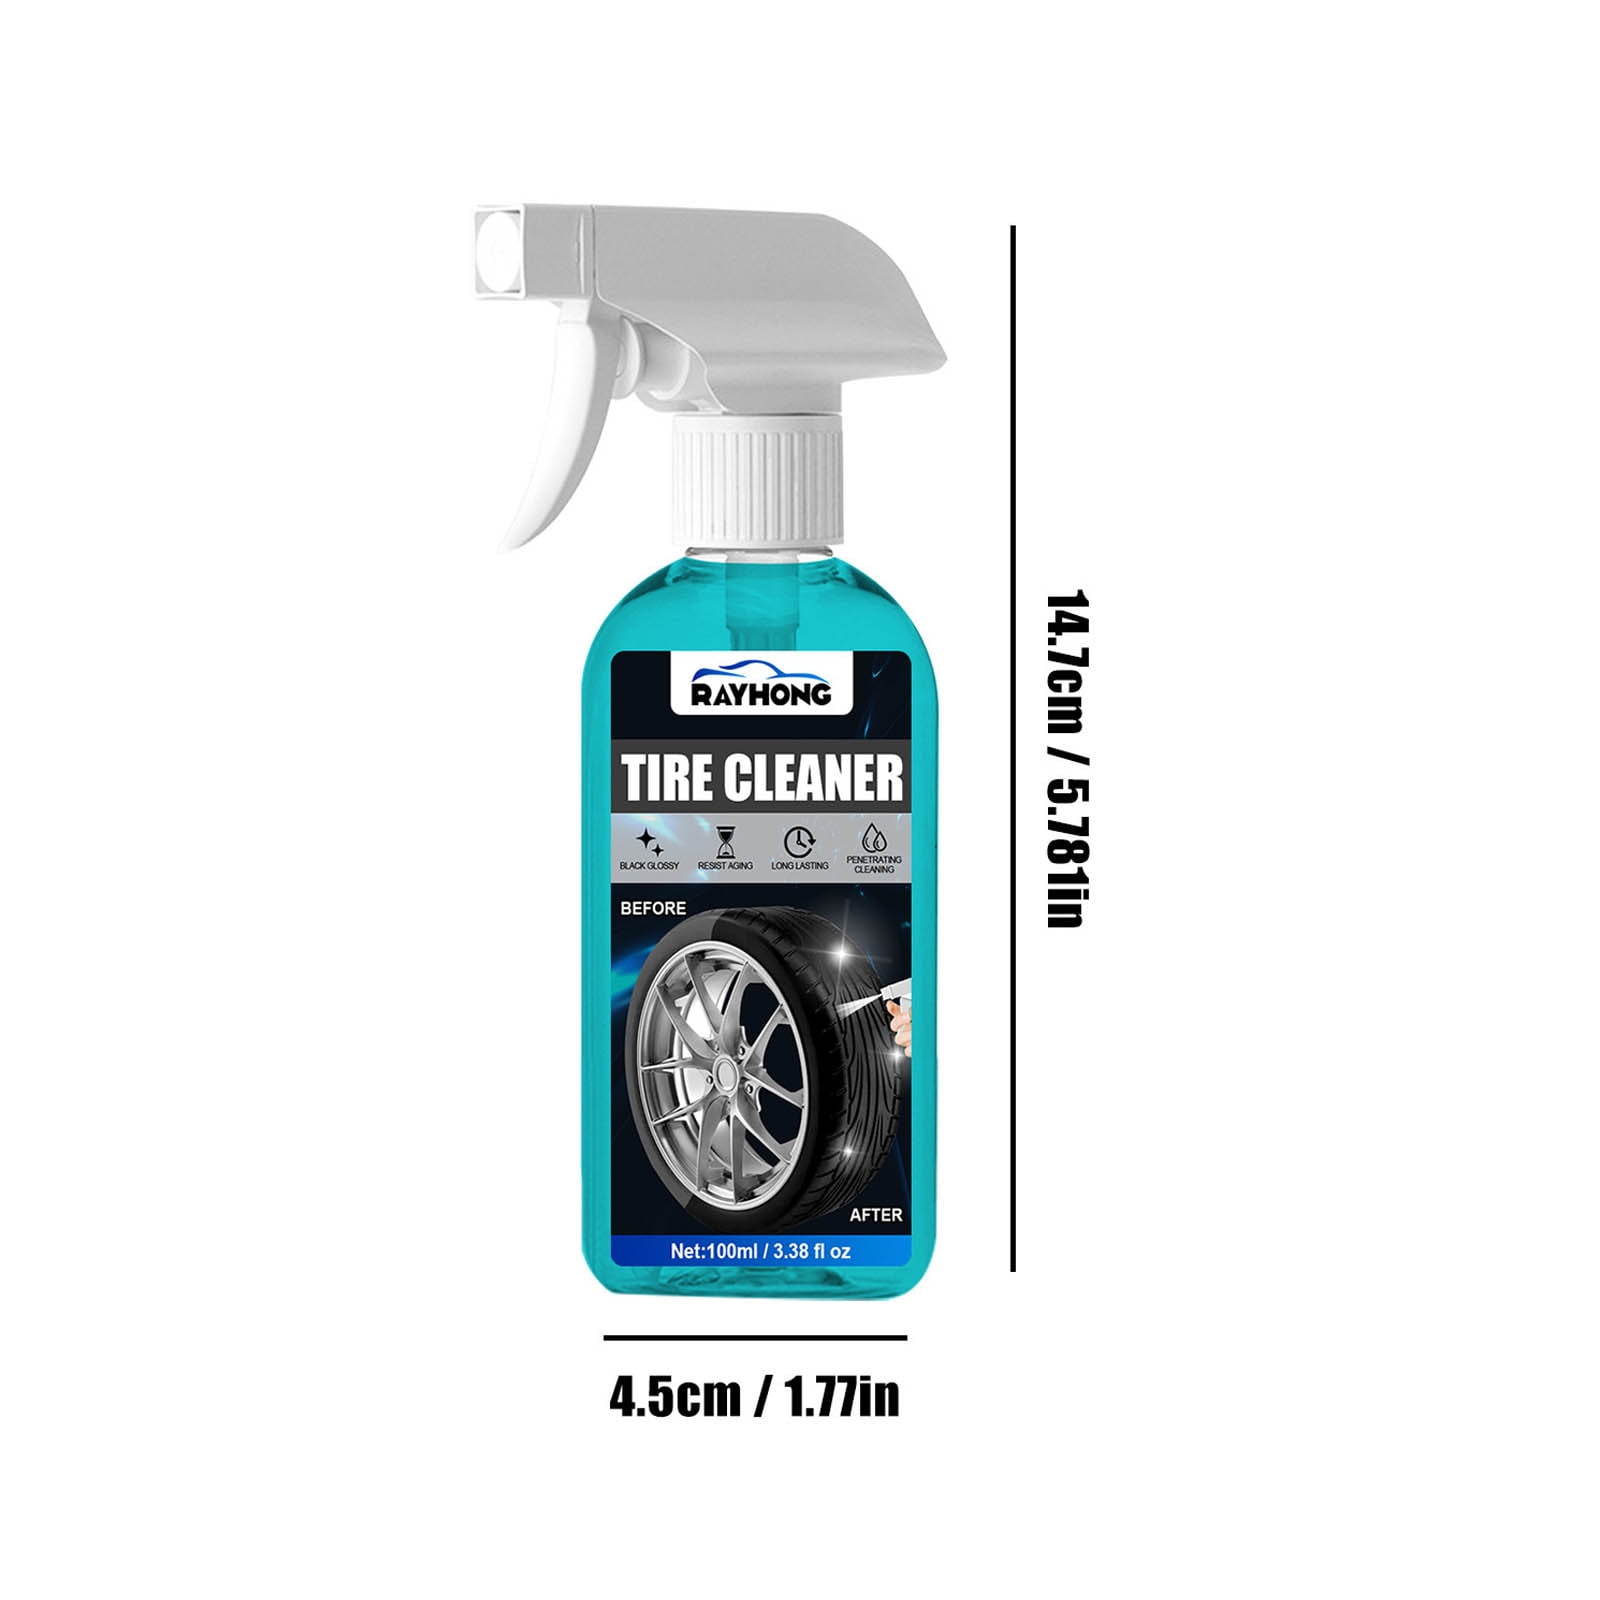 Delet Vonixx Cleaner For Tires Rubber Headlight 500ml - AliExpress